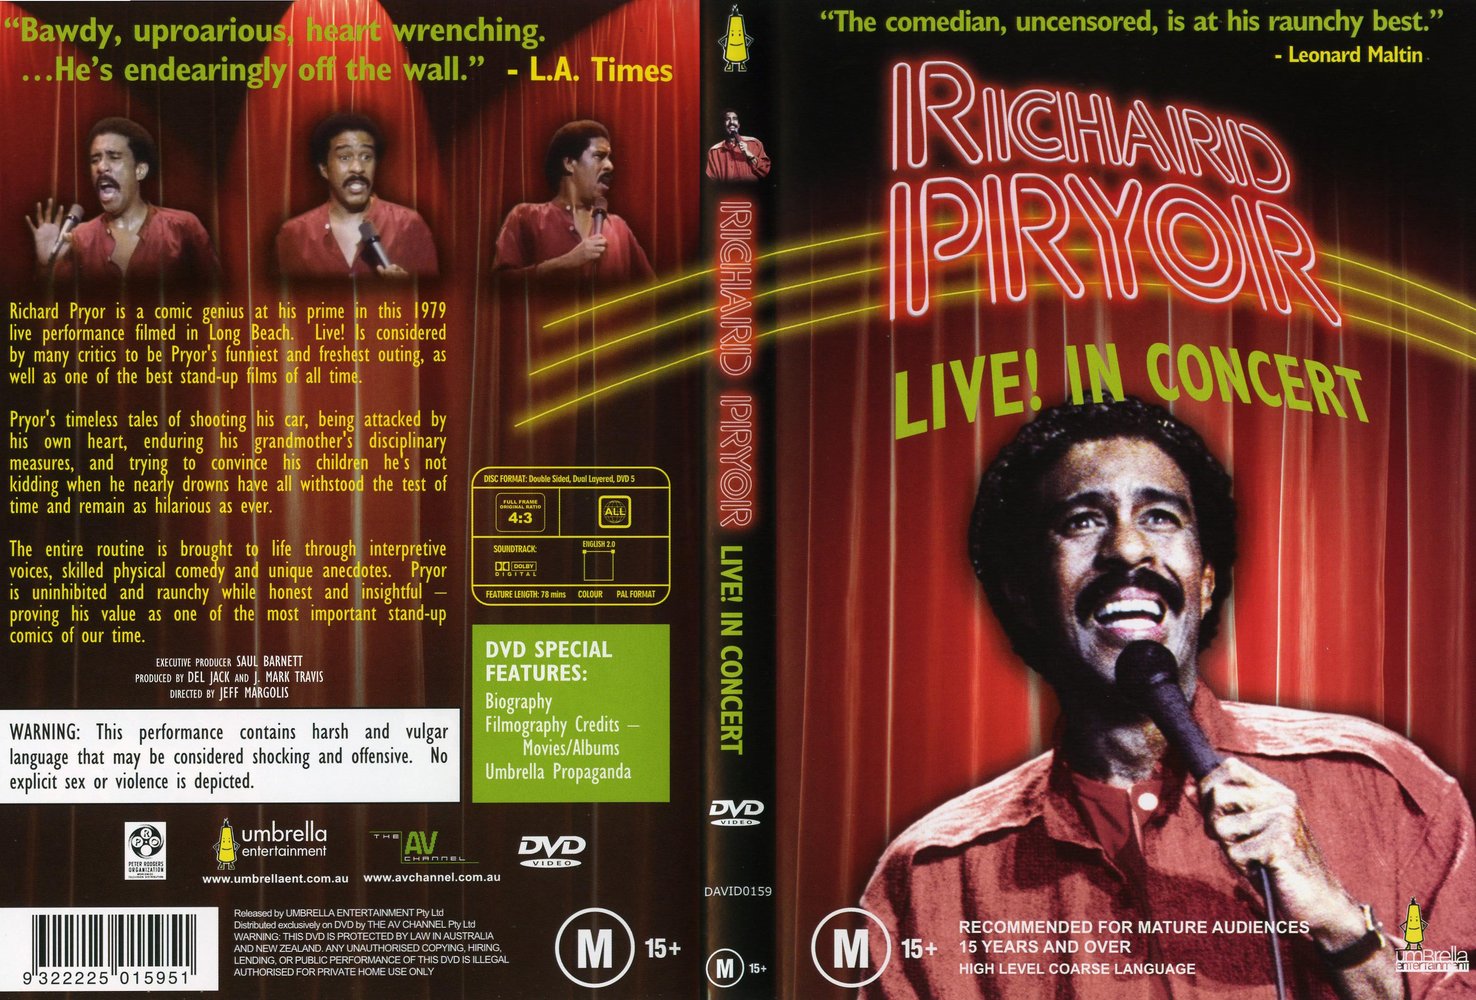 Jaquette DVD Richard Pryor Live in concert